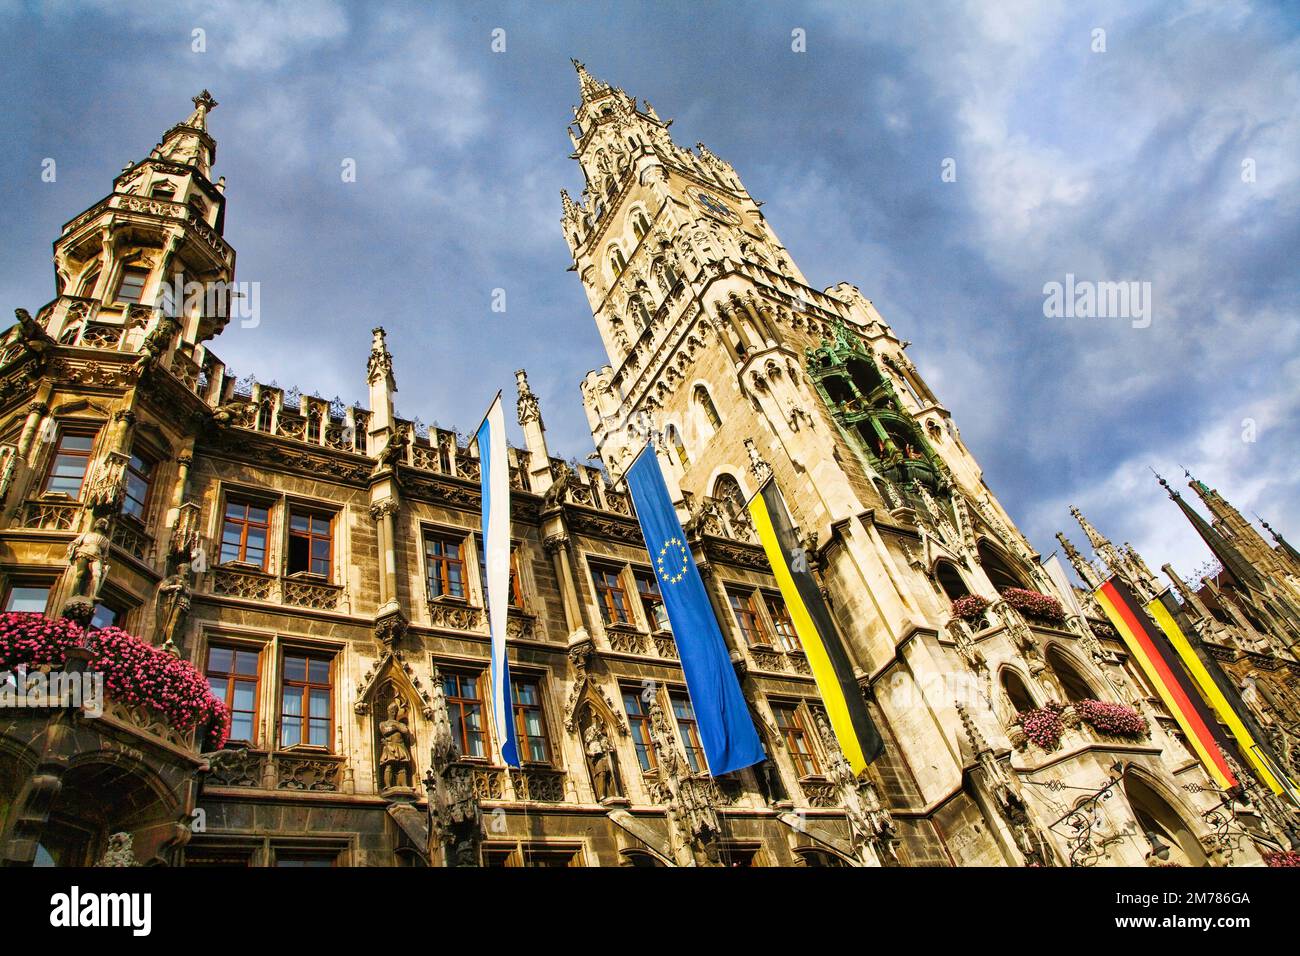 El Rathaus Glockenspiel en Marienplatz, Munich, Alemania Foto de stock